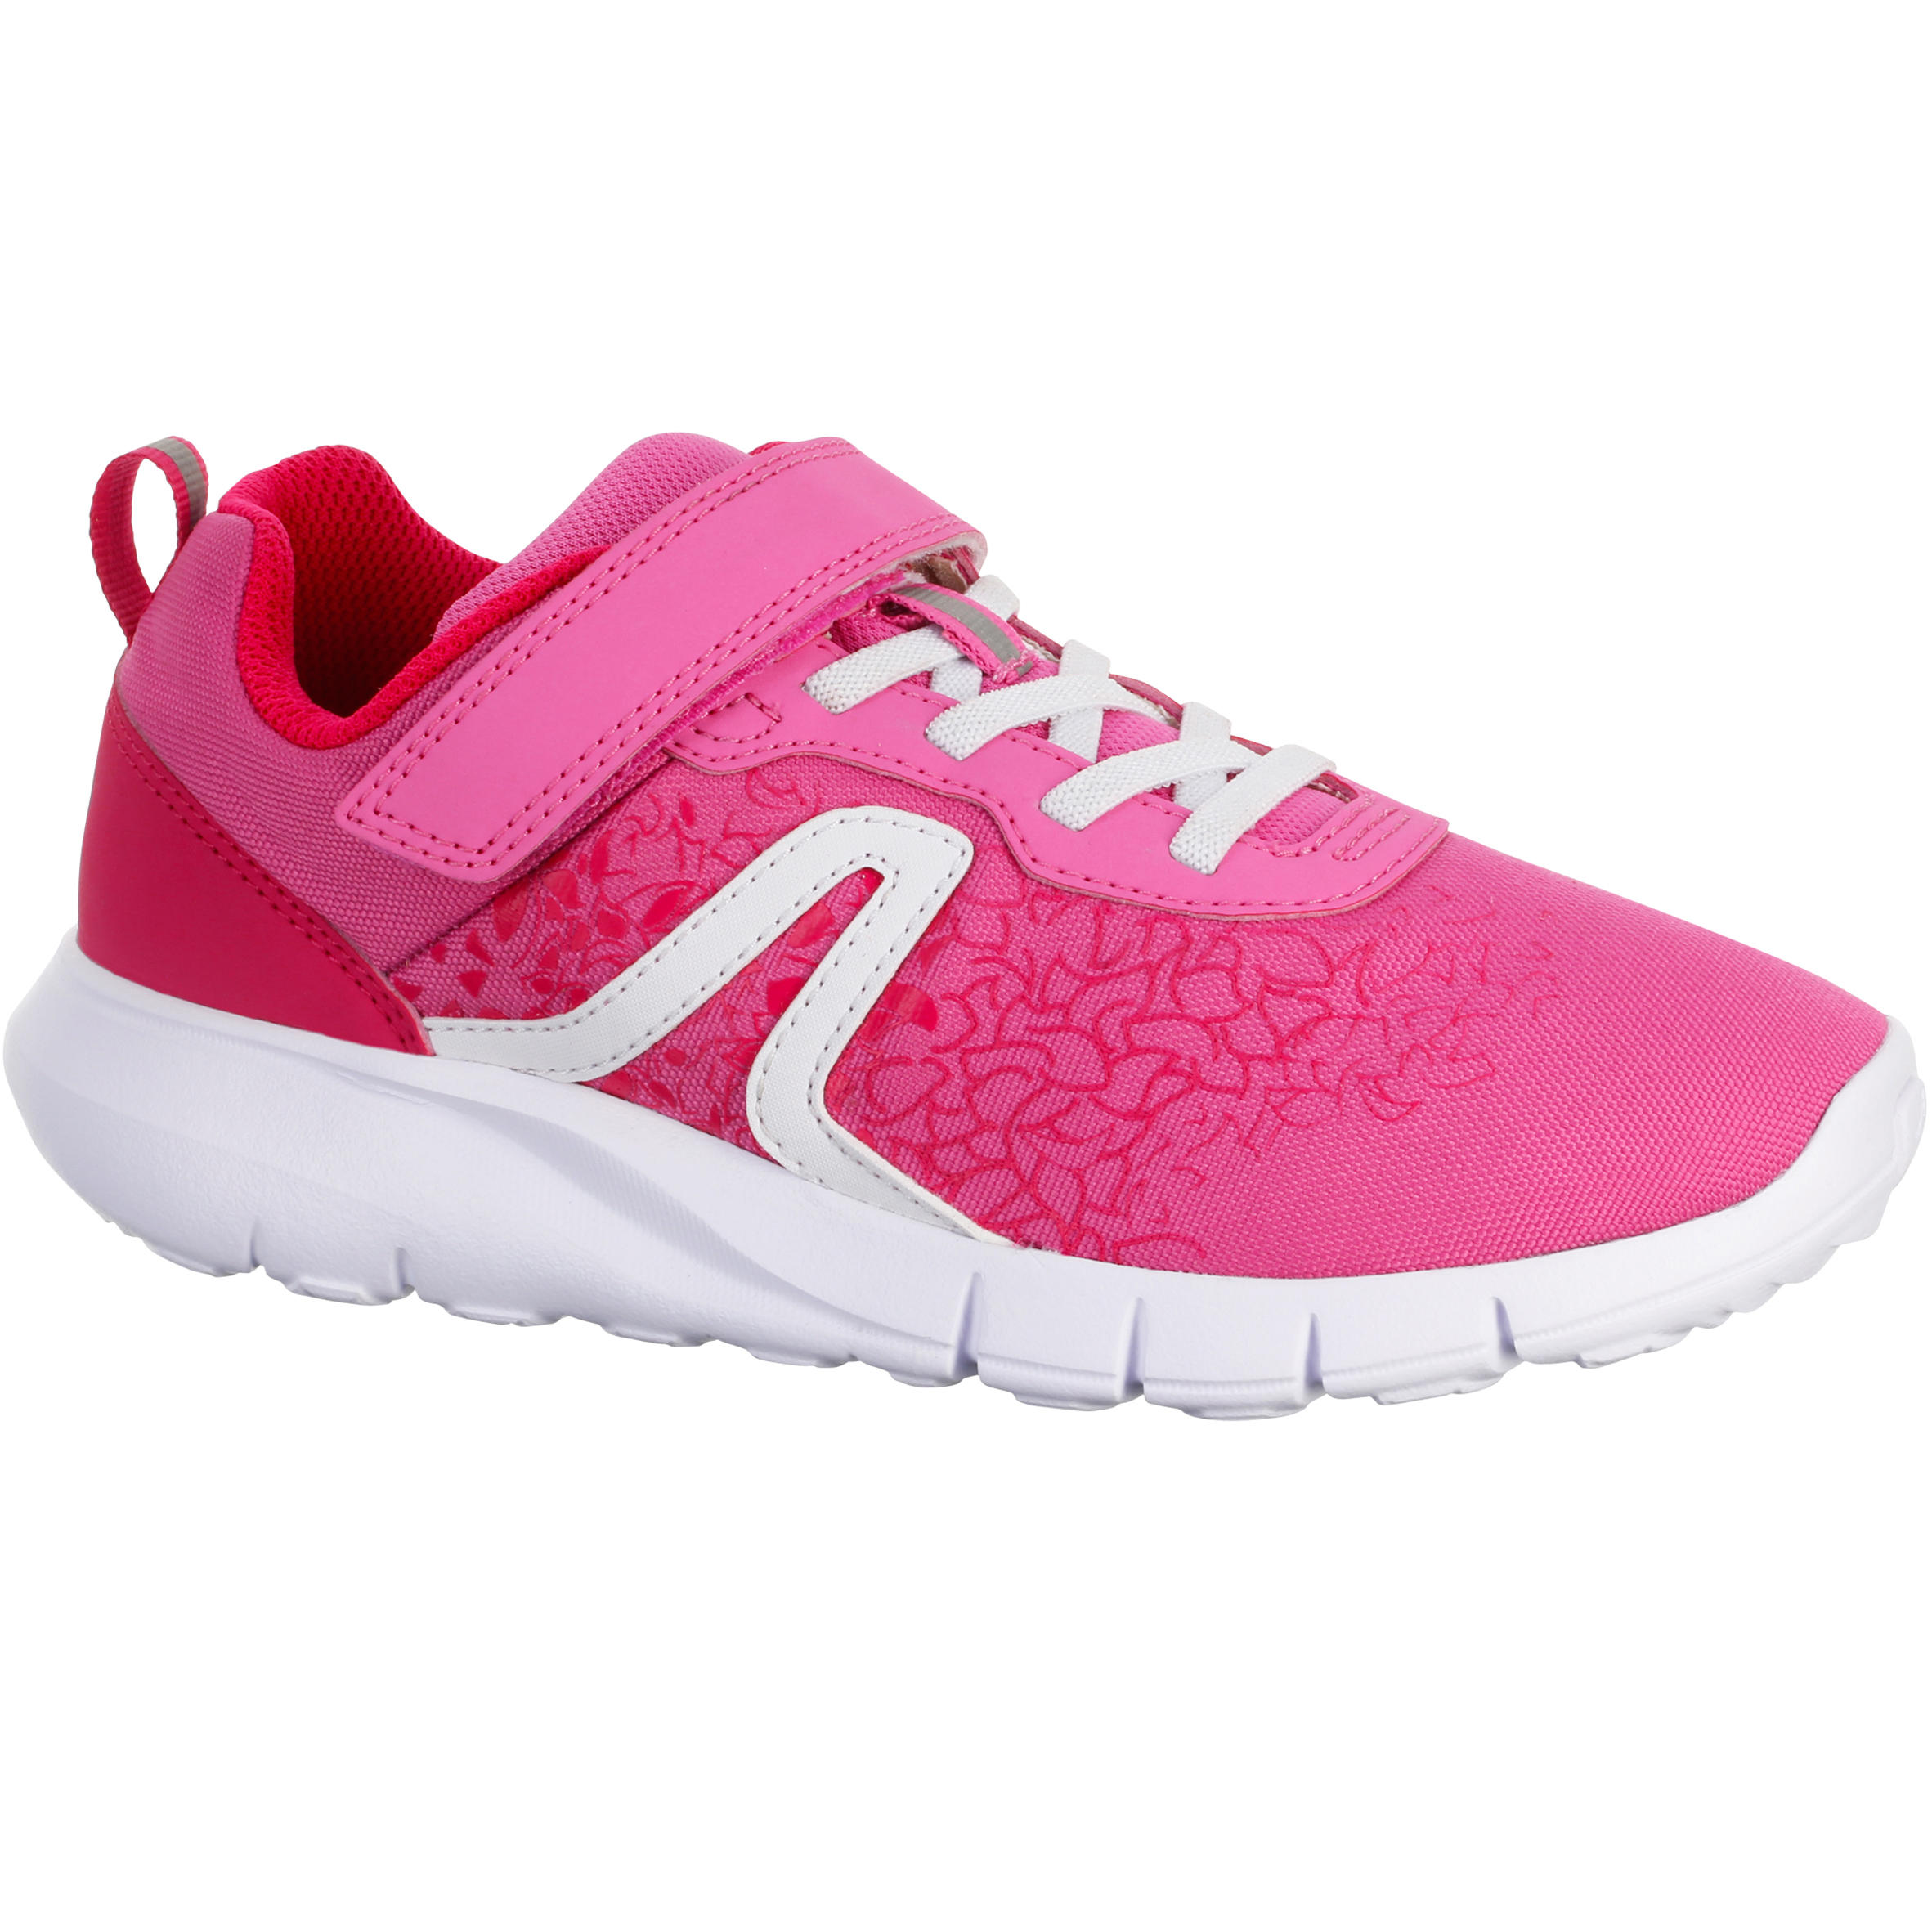 DECATHLON Soft 140 Children's Fitness Walking Shoes - Pink